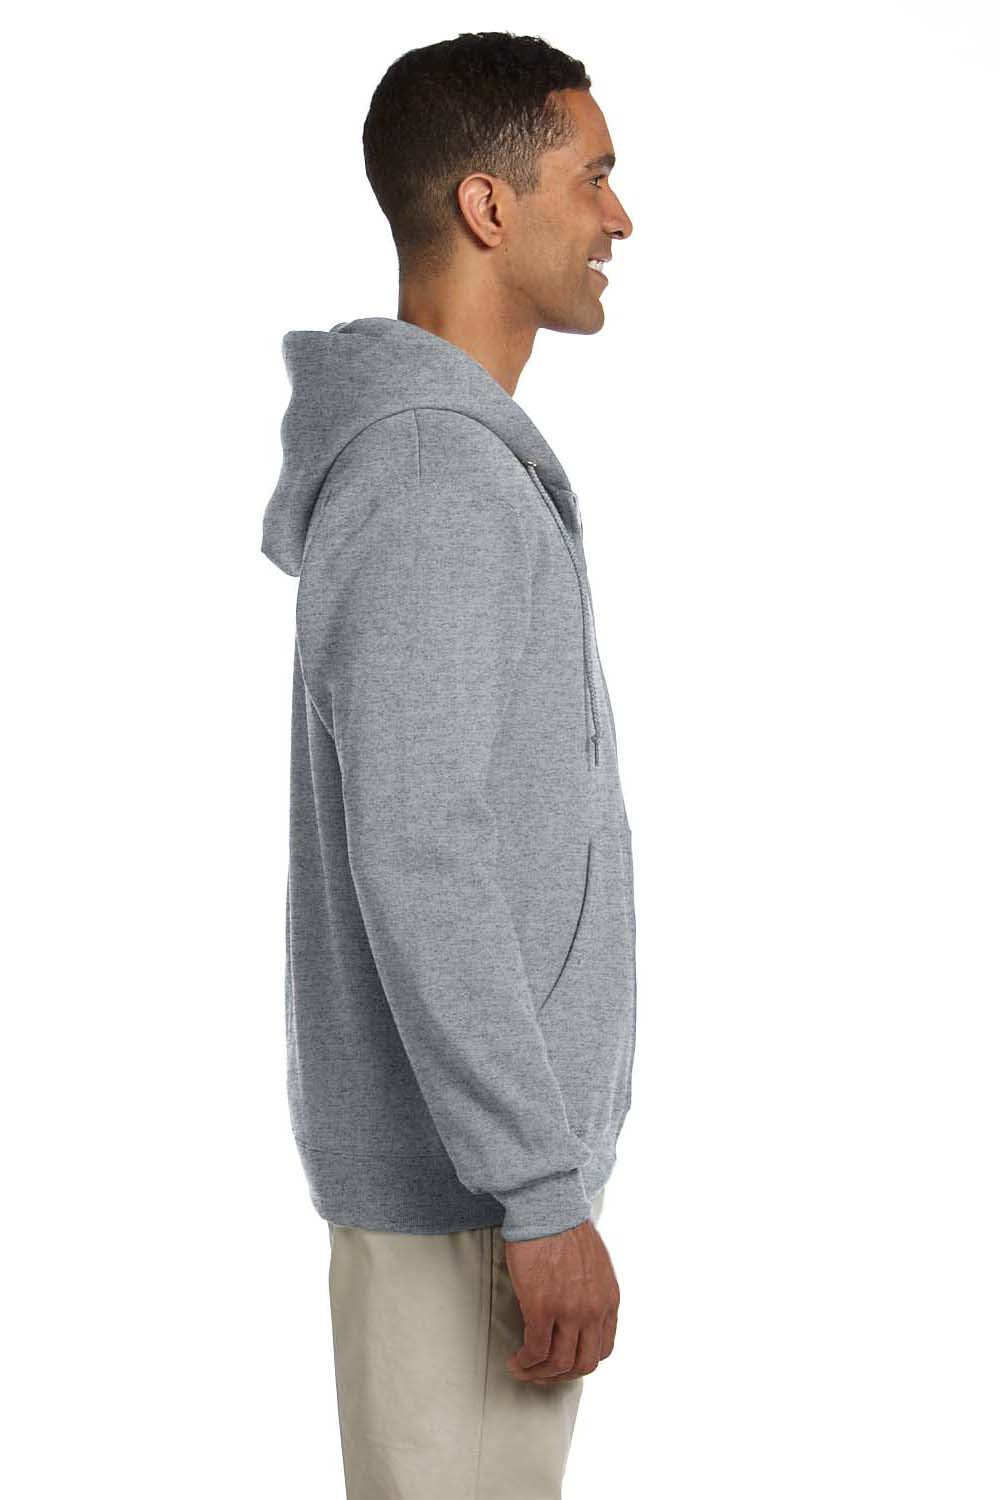 Jerzees 4999 Mens Super Sweats NuBlend Fleece Full Zip Hooded Sweatshirt Hoodie Oxford Grey Side